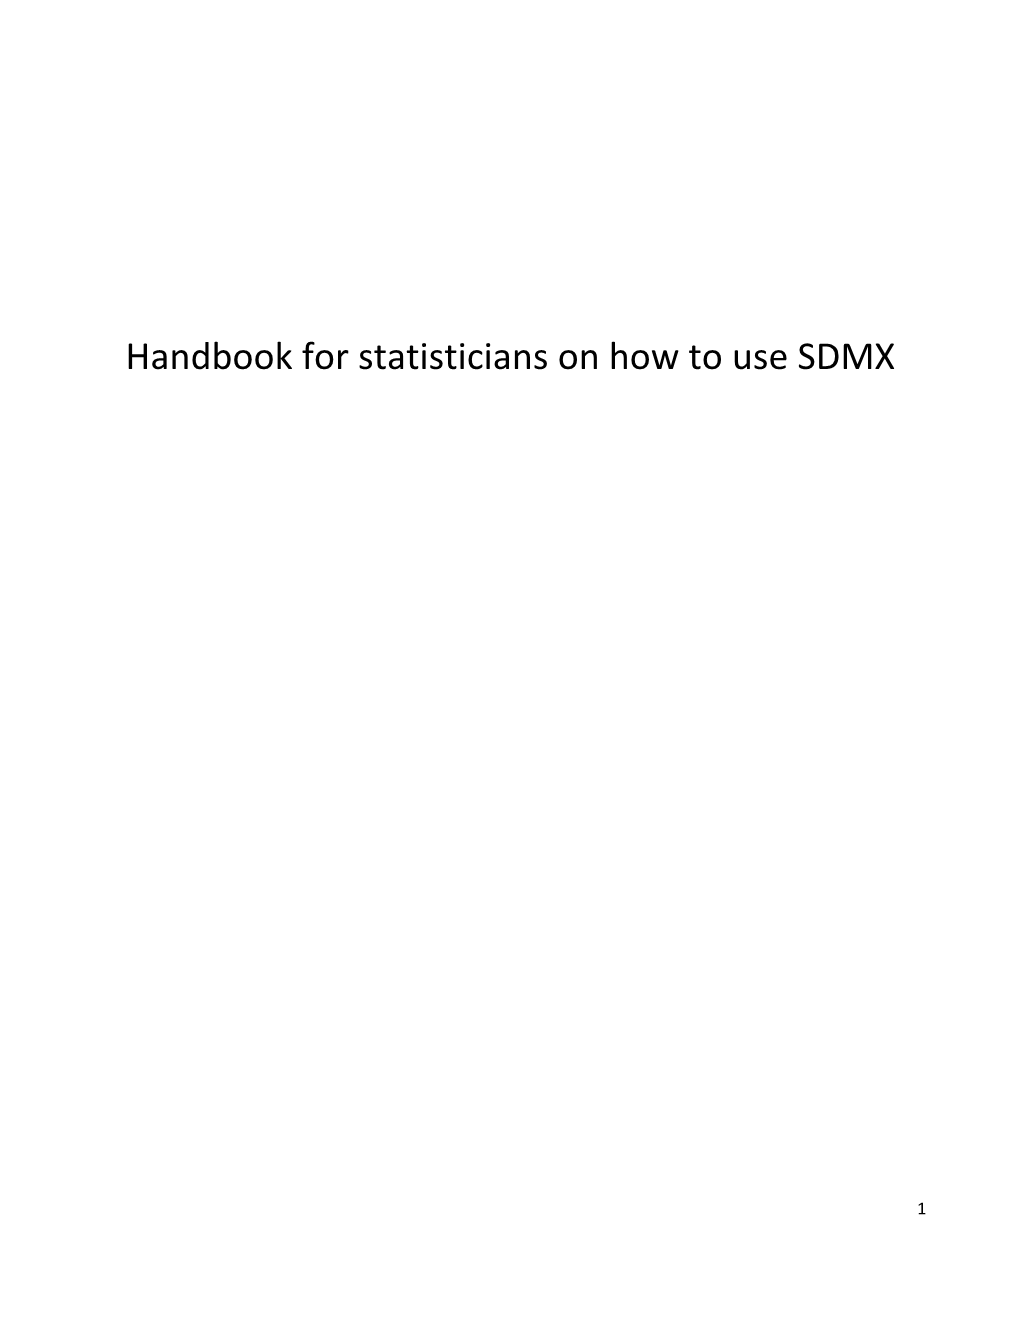 SDMX Data Modeling Tutorial